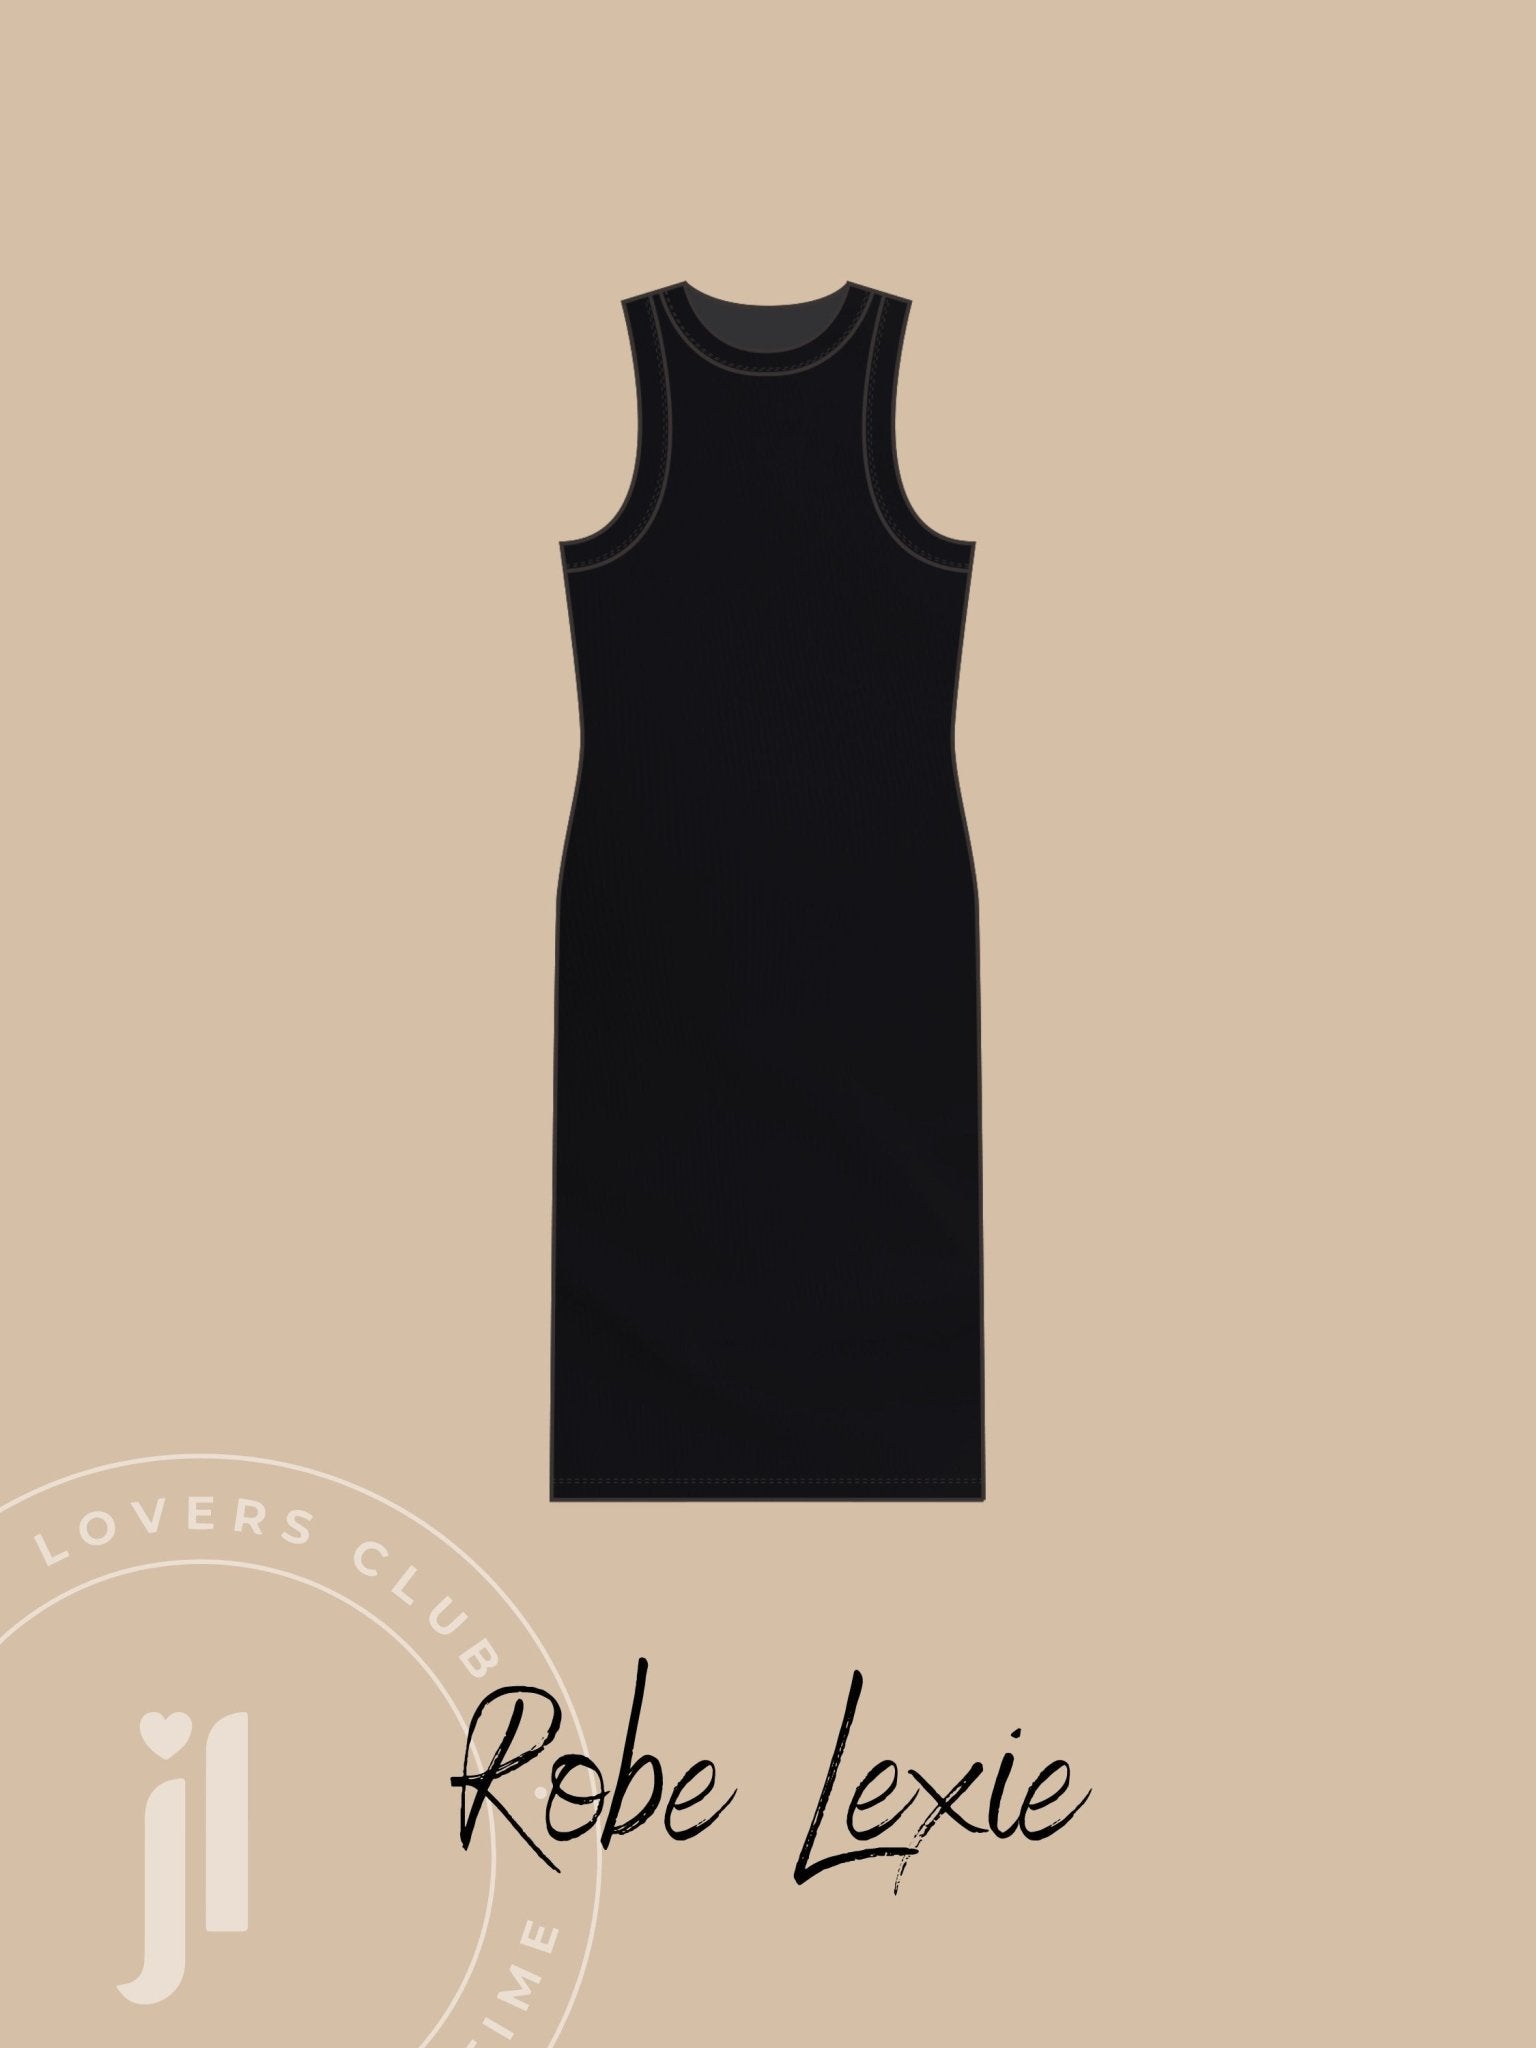 Joli Kit Couture - Robe Lexie noire longueur genou - Joli Lab